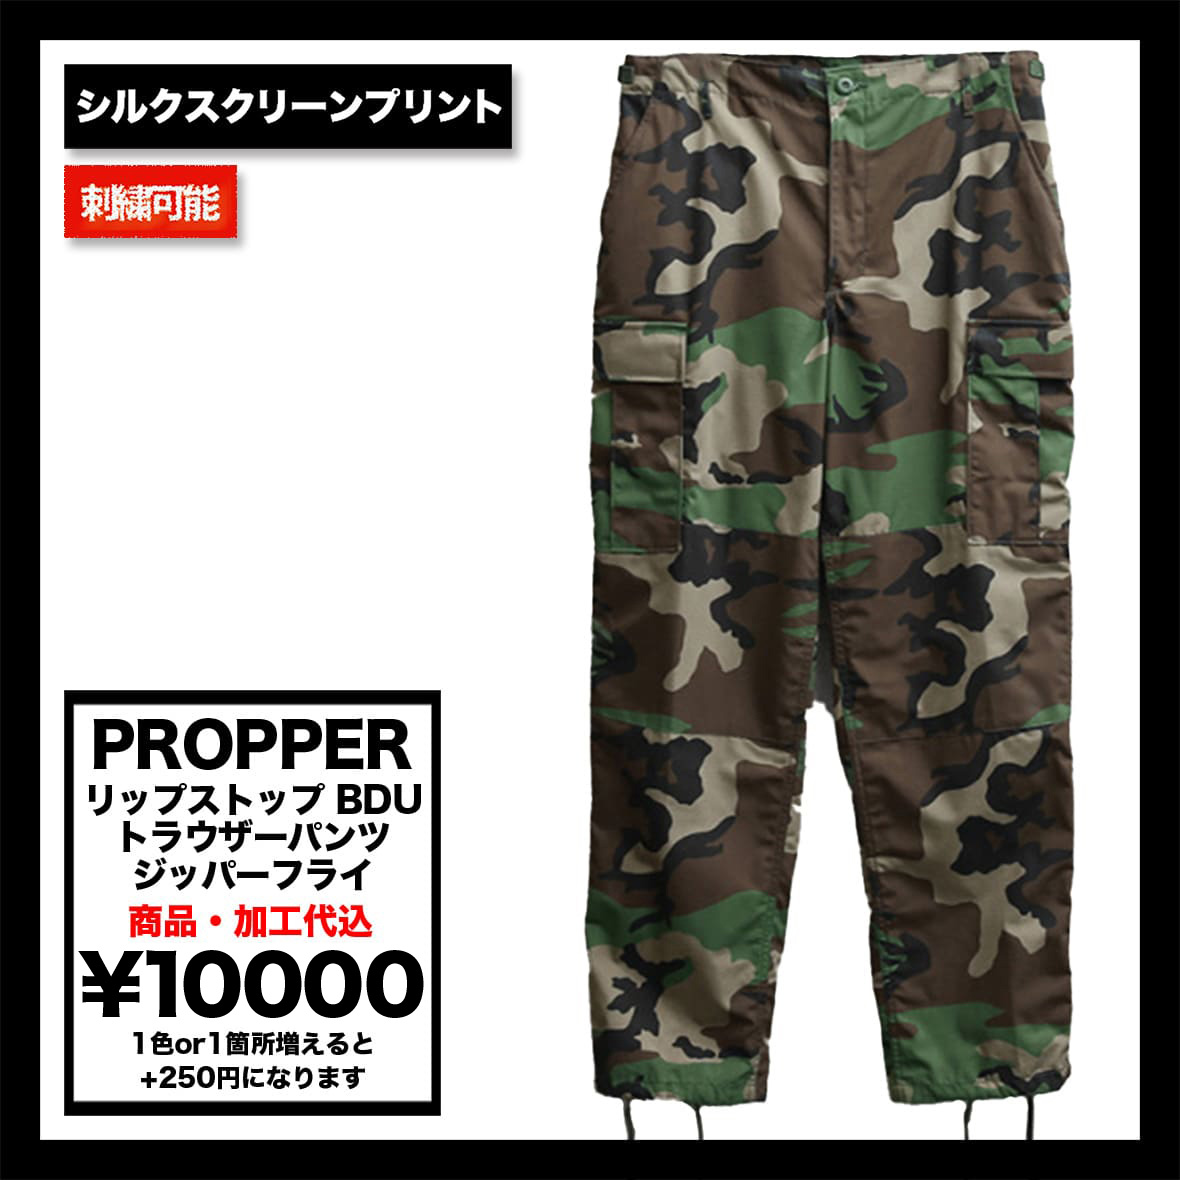 PROPPER プロパー リップストップ BDU トラウザーパンツ ジッパーフライ (品番F525025)